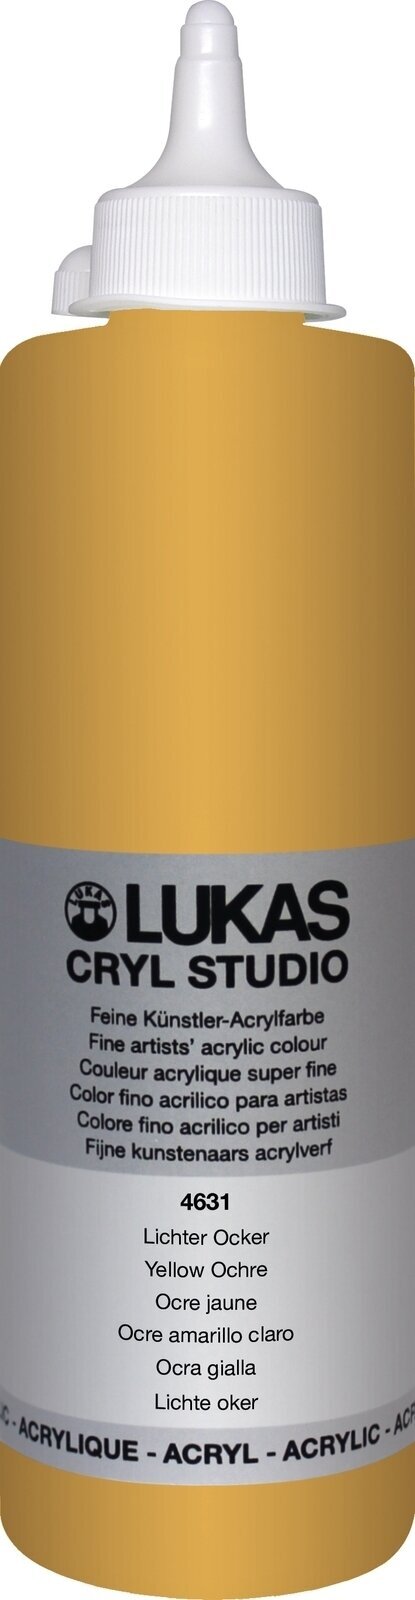 Acrylic Paint Lukas Cryl Studio Acrylic Paint 500 ml Yellow Ochre